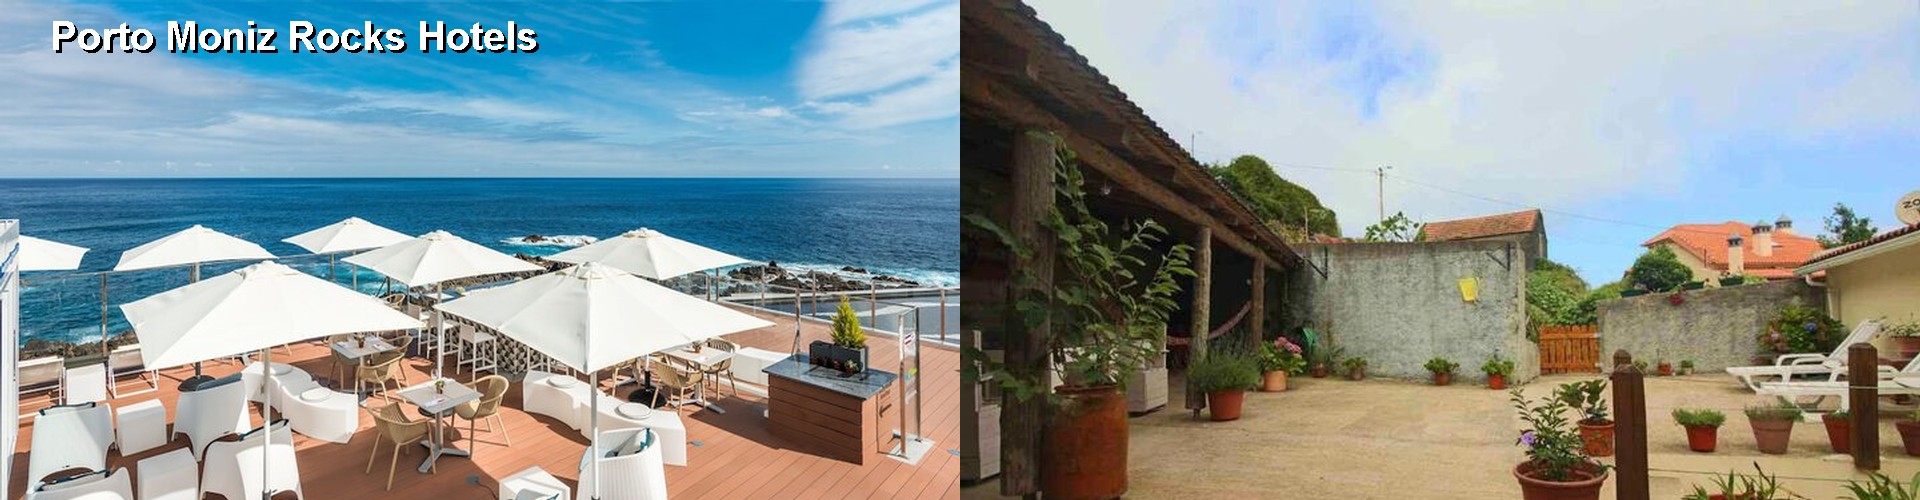 5 Best Hotels near Porto Moniz Rocks